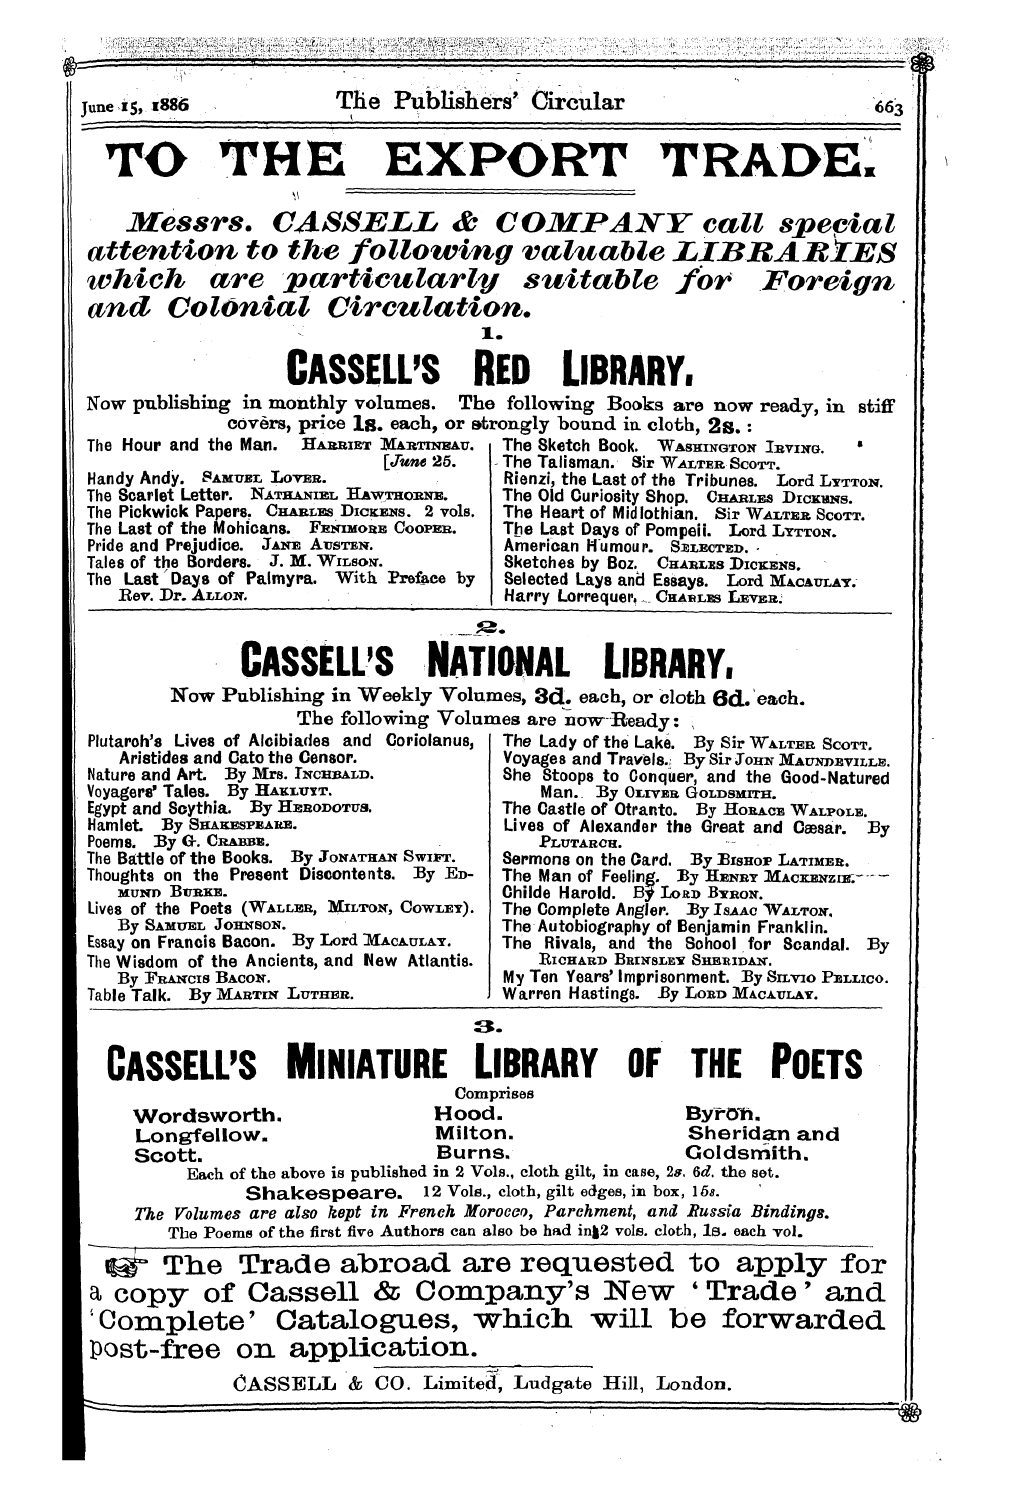 Publishers’ Circular (1880-1890): jS F Y, 1st edition: 69